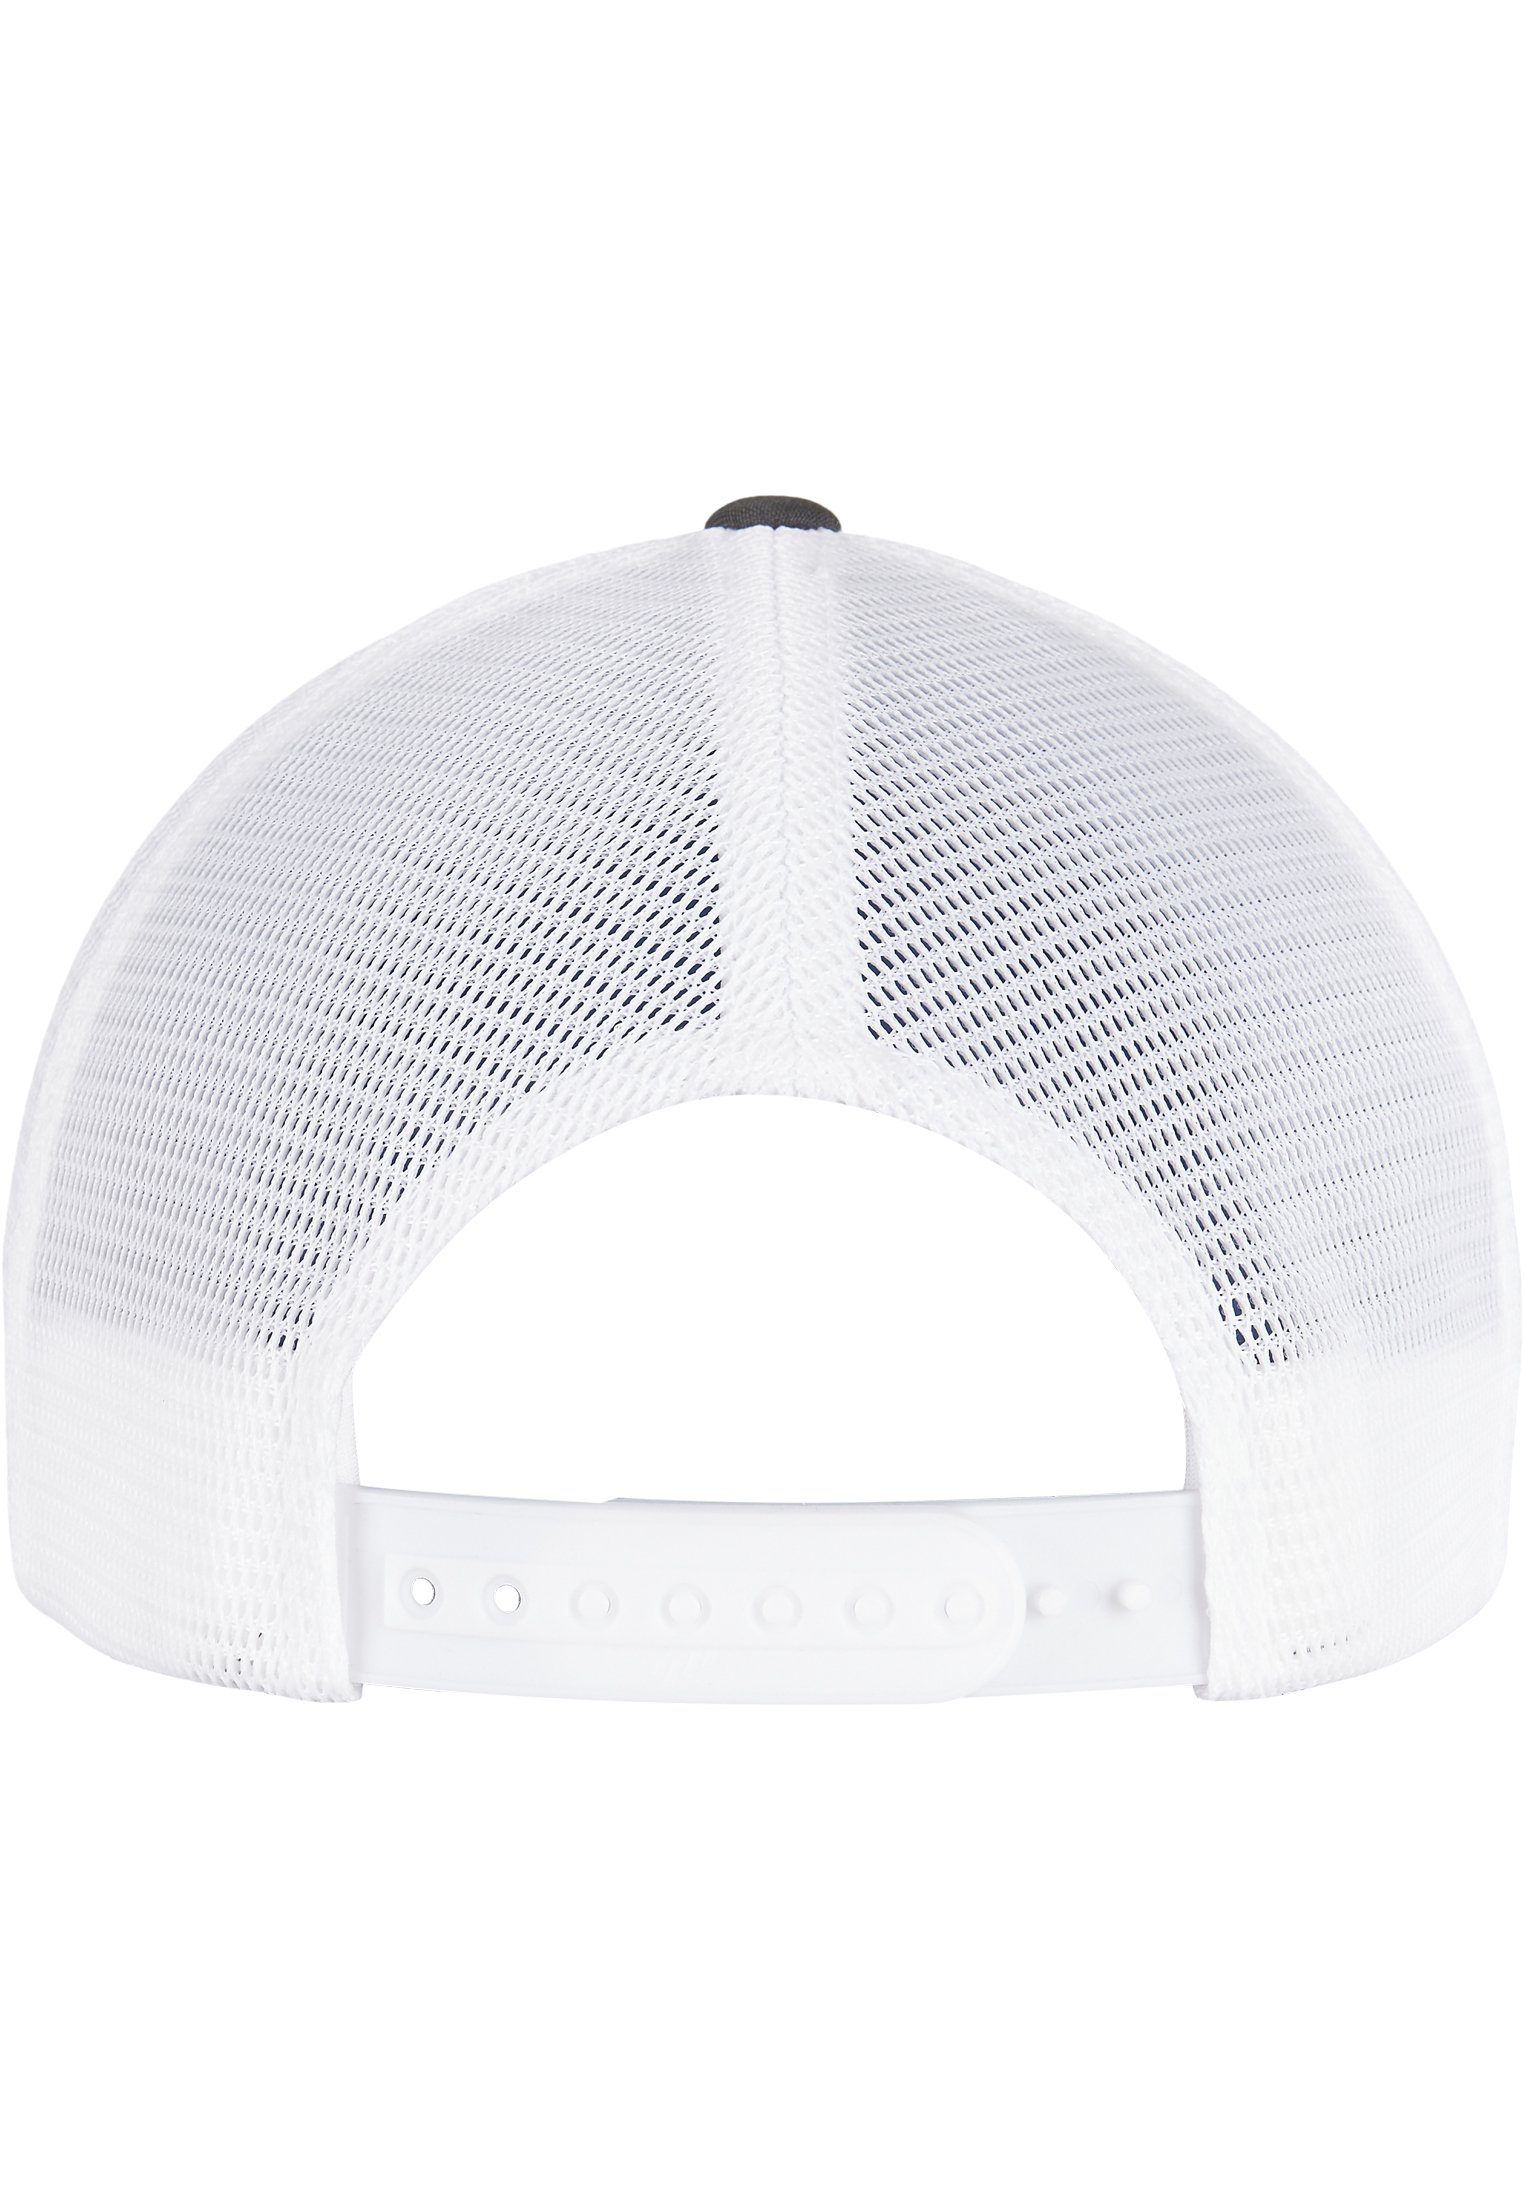 Flexfit Flex Cap Accessoires 360° charcoal/white 2-Tone Omnimesh Cap